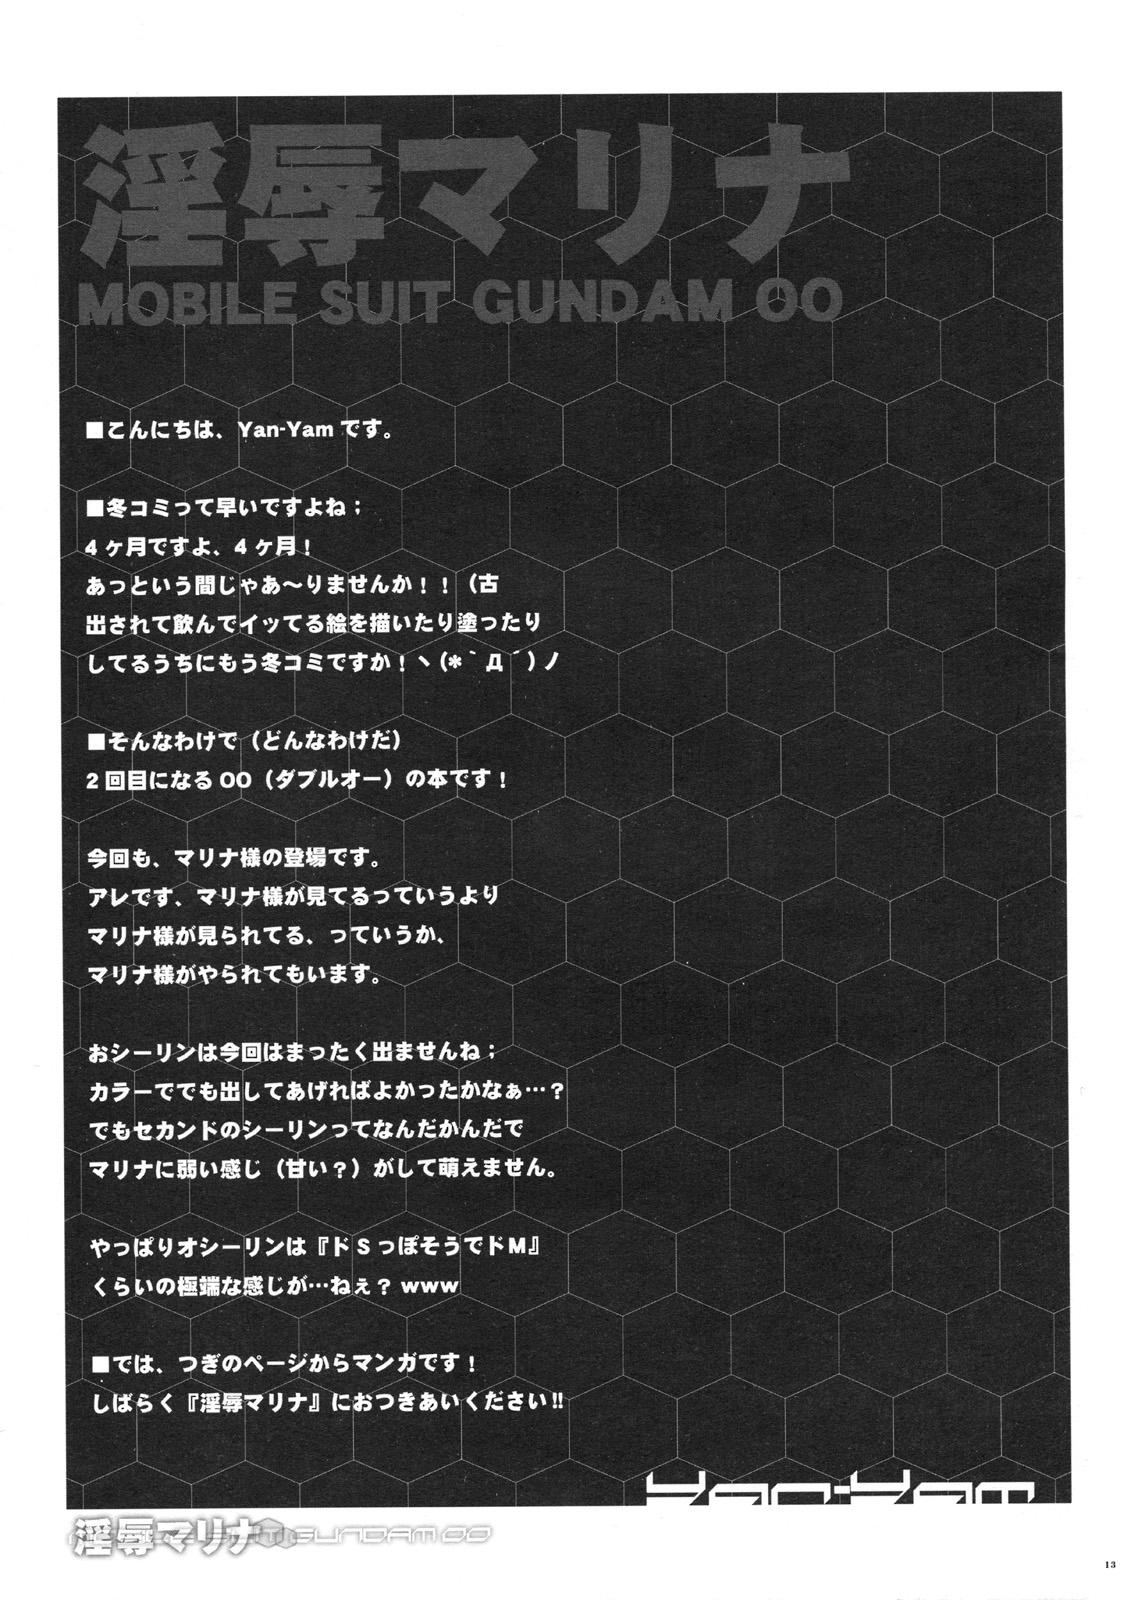 Lez Injoku Marina - Gundam 00 Brasil - Page 12